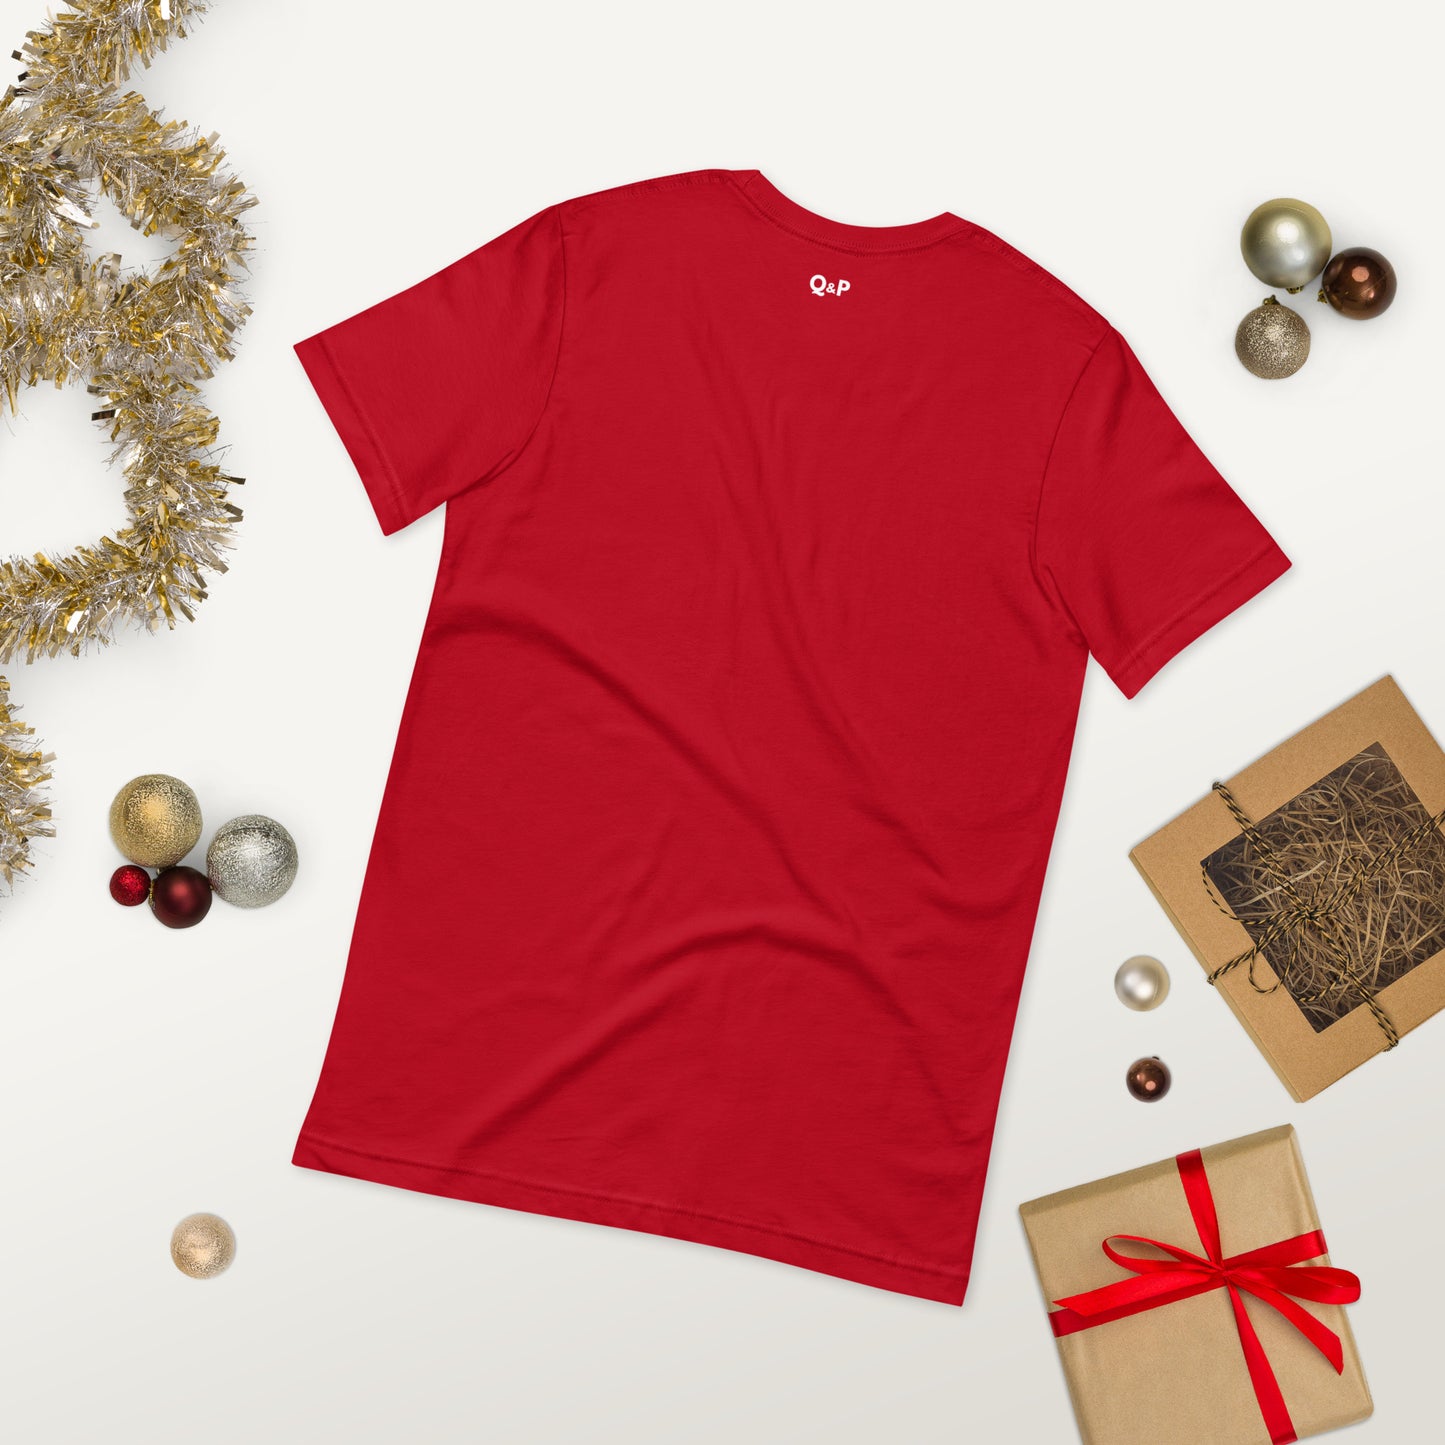 Abide - Christmas Unisex T-Shirt